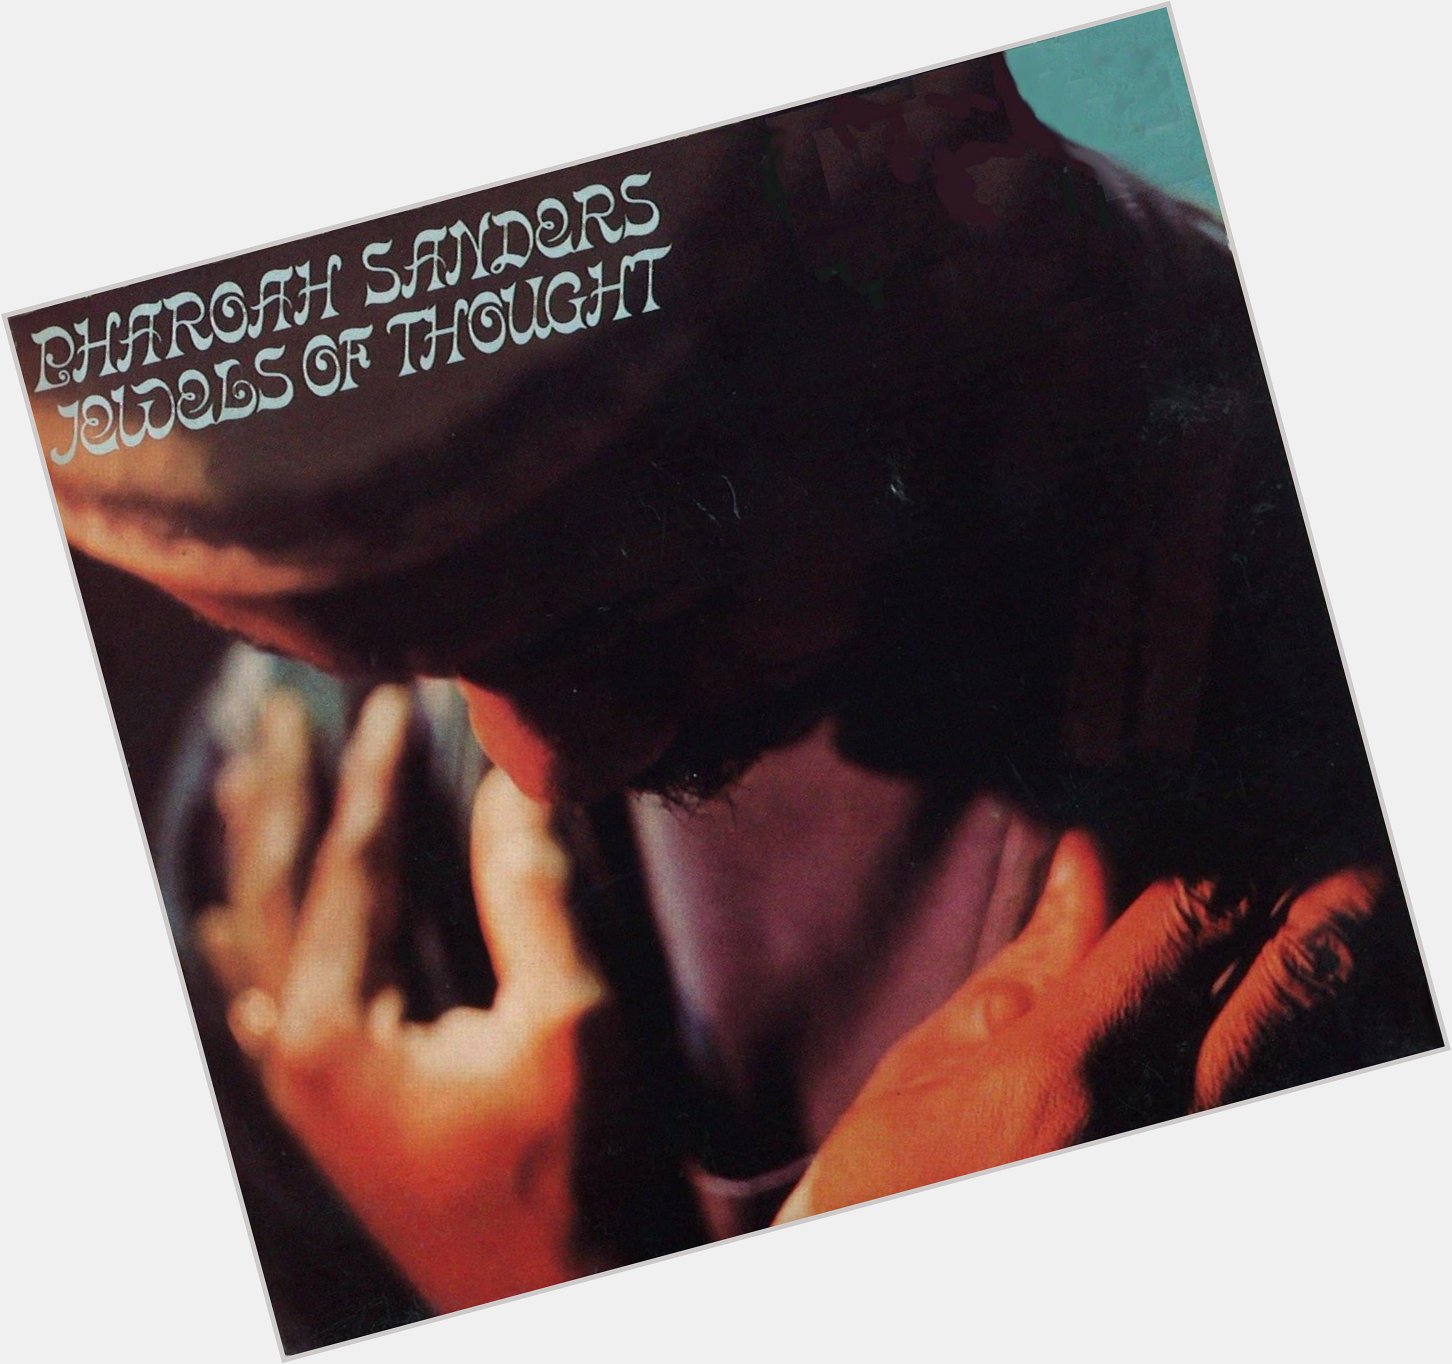 Tonight s Jazz Album is from Pharoah Sanders (Happy Birthday) - Jewels Of Thought  